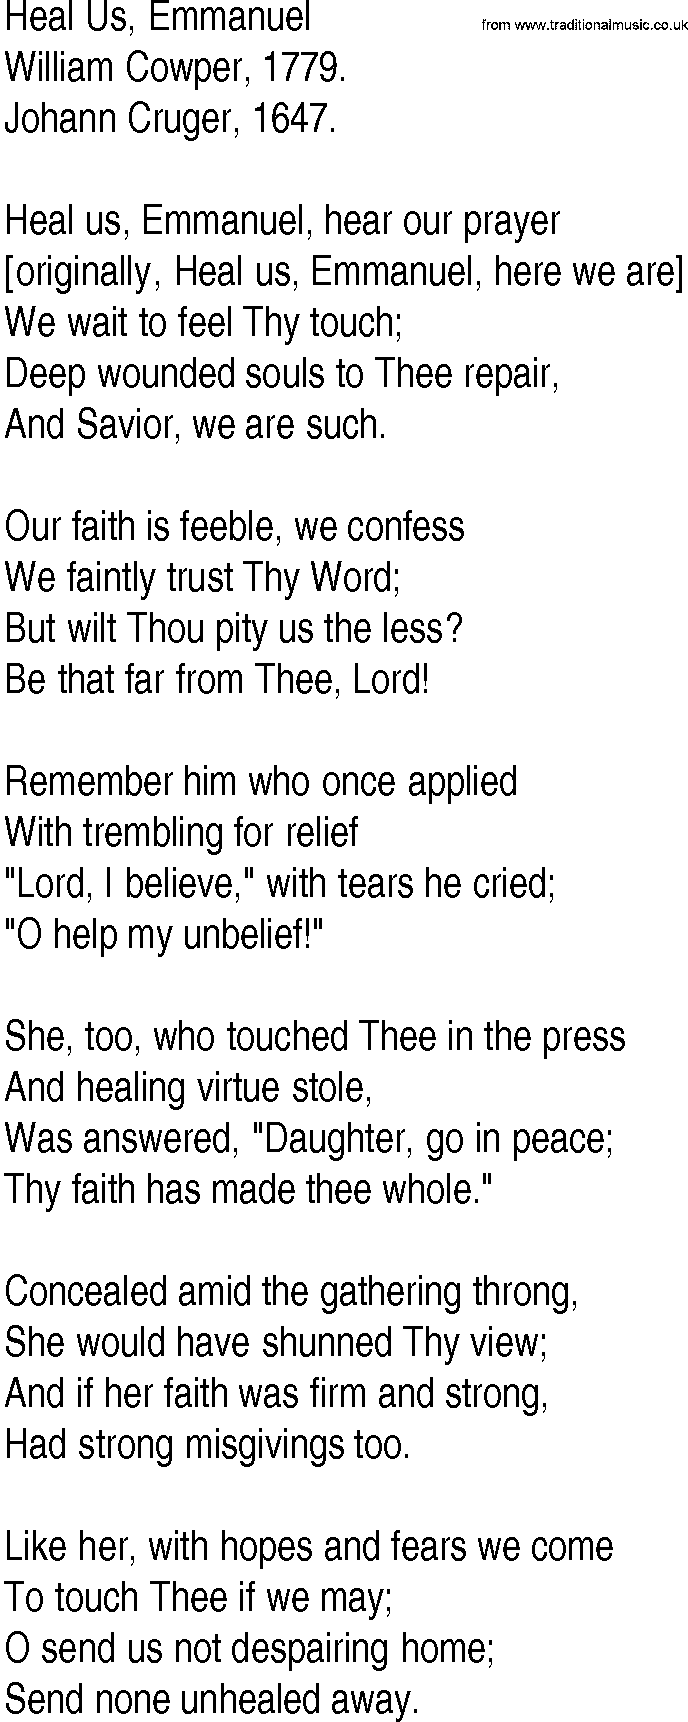 Hymn and Gospel Song: Heal Us, Emmanuel by William Cowper lyrics